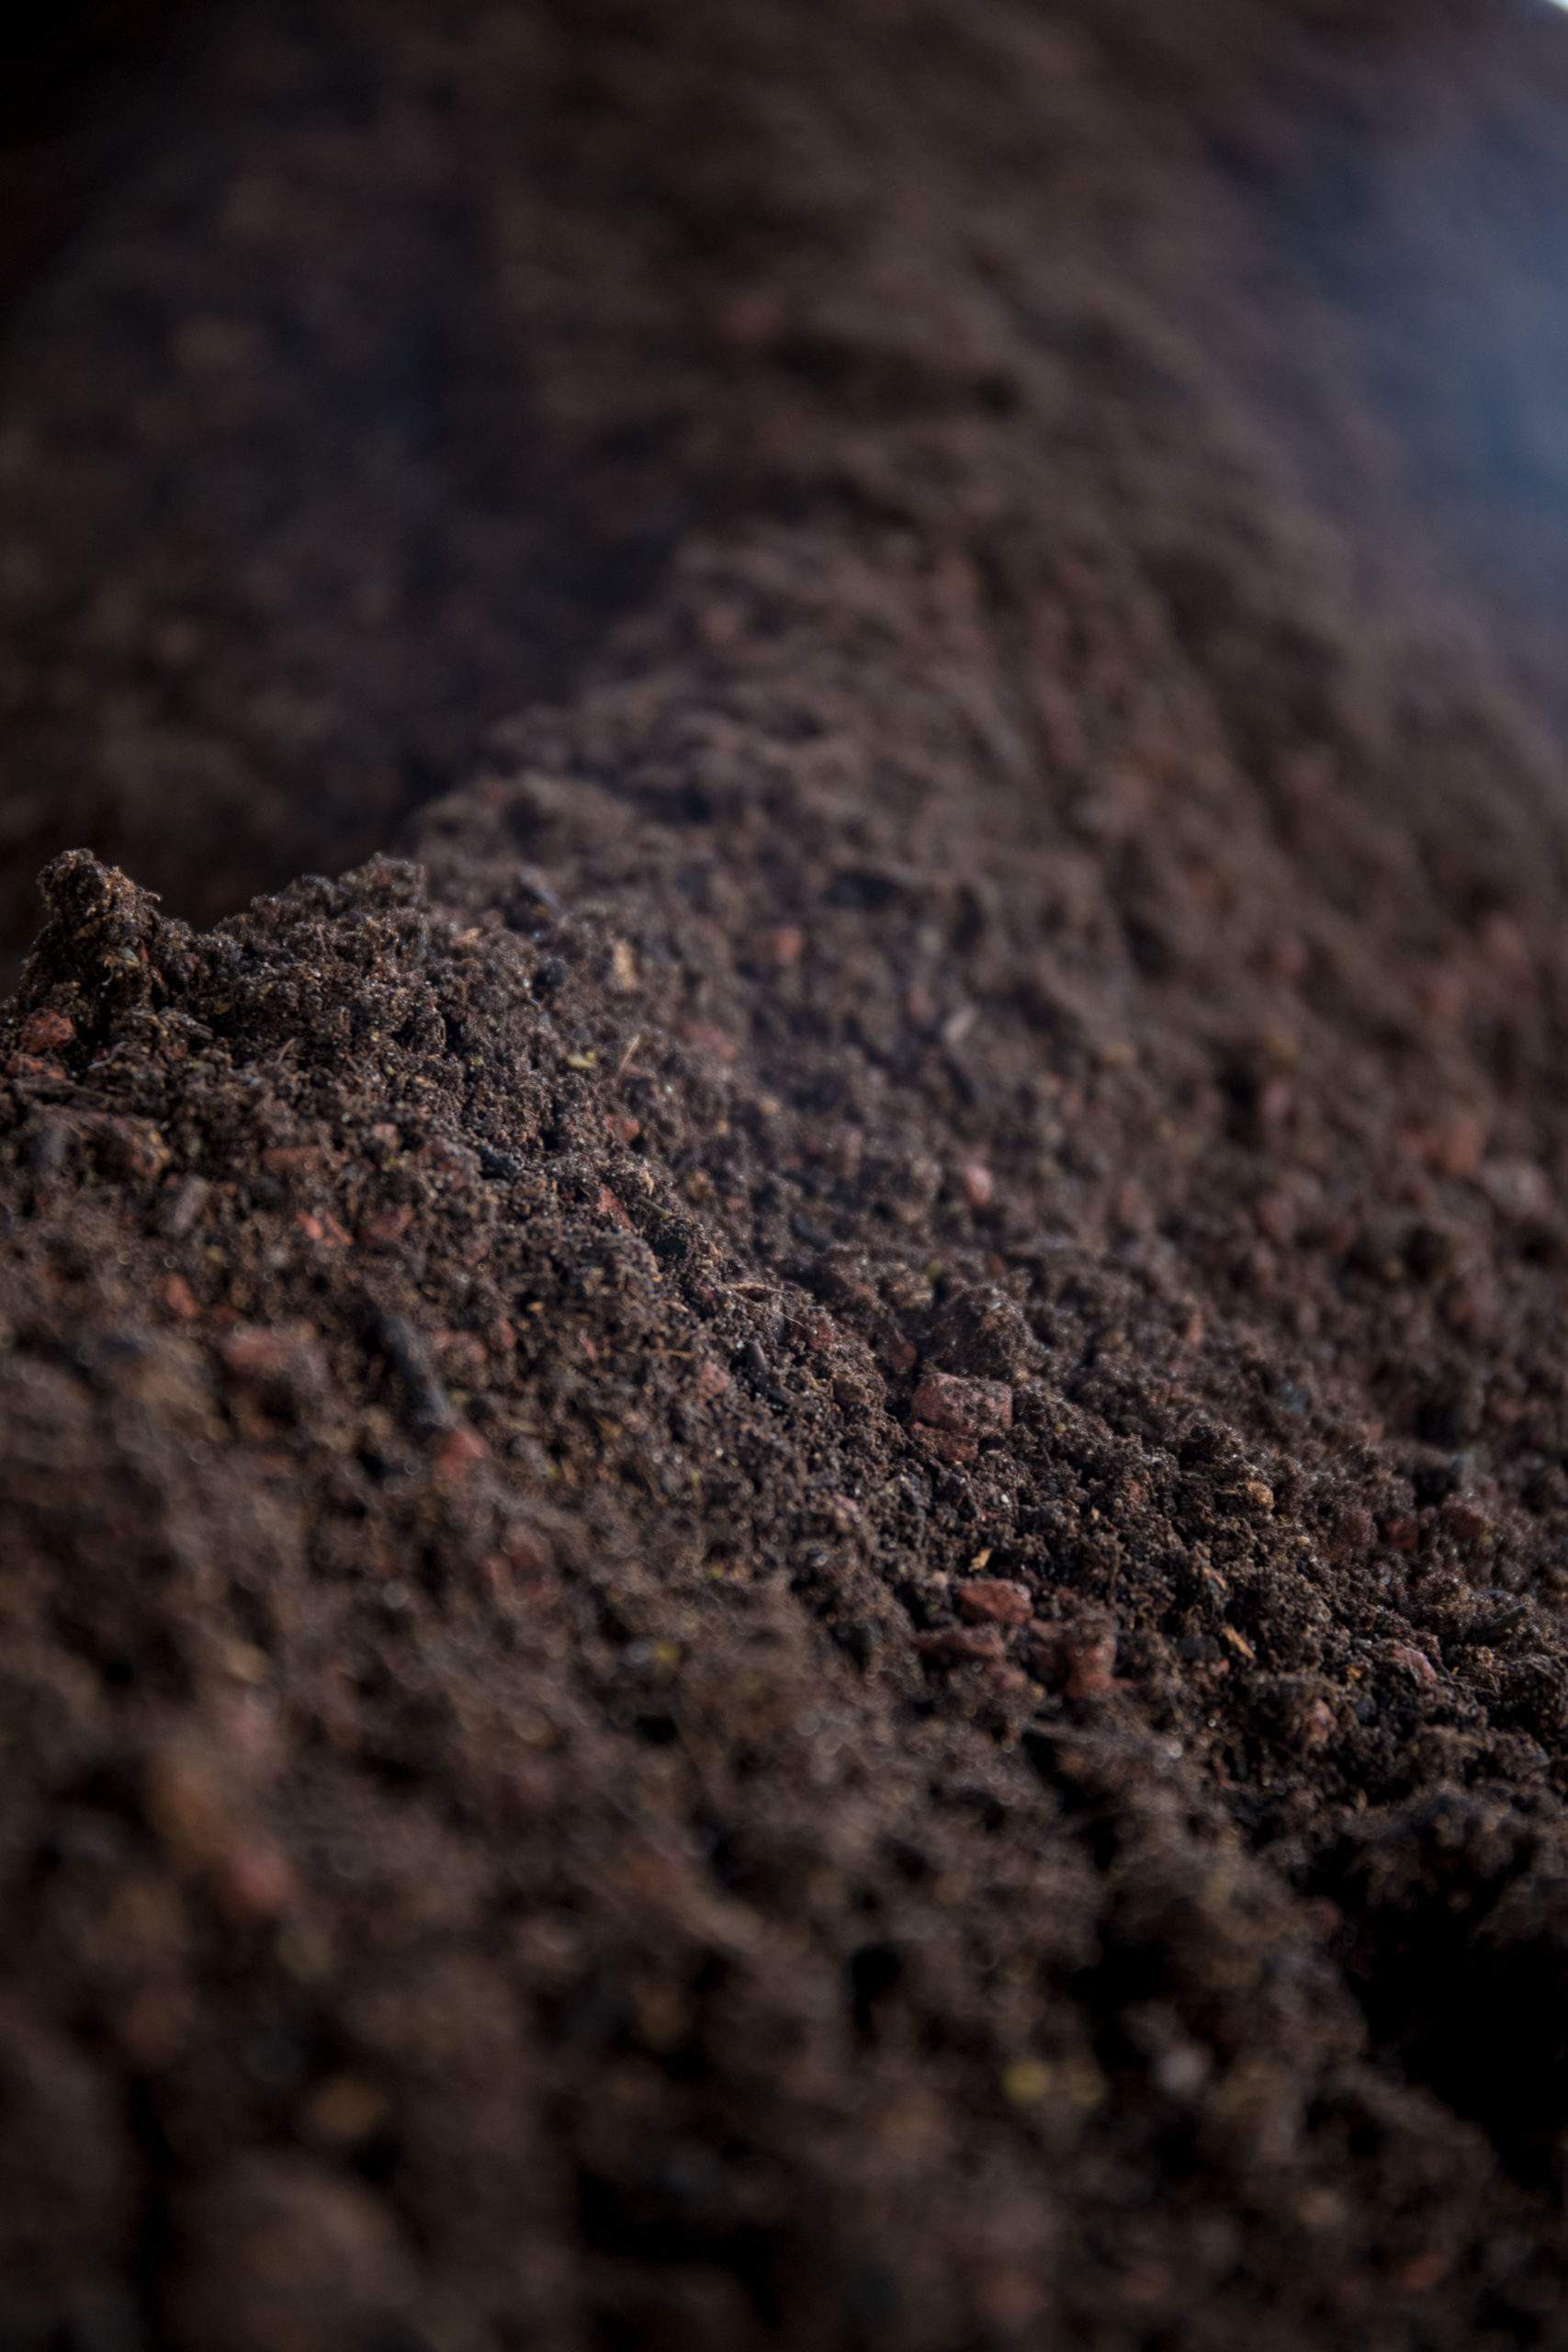 hot steaming pile of Easy as Organics living soil